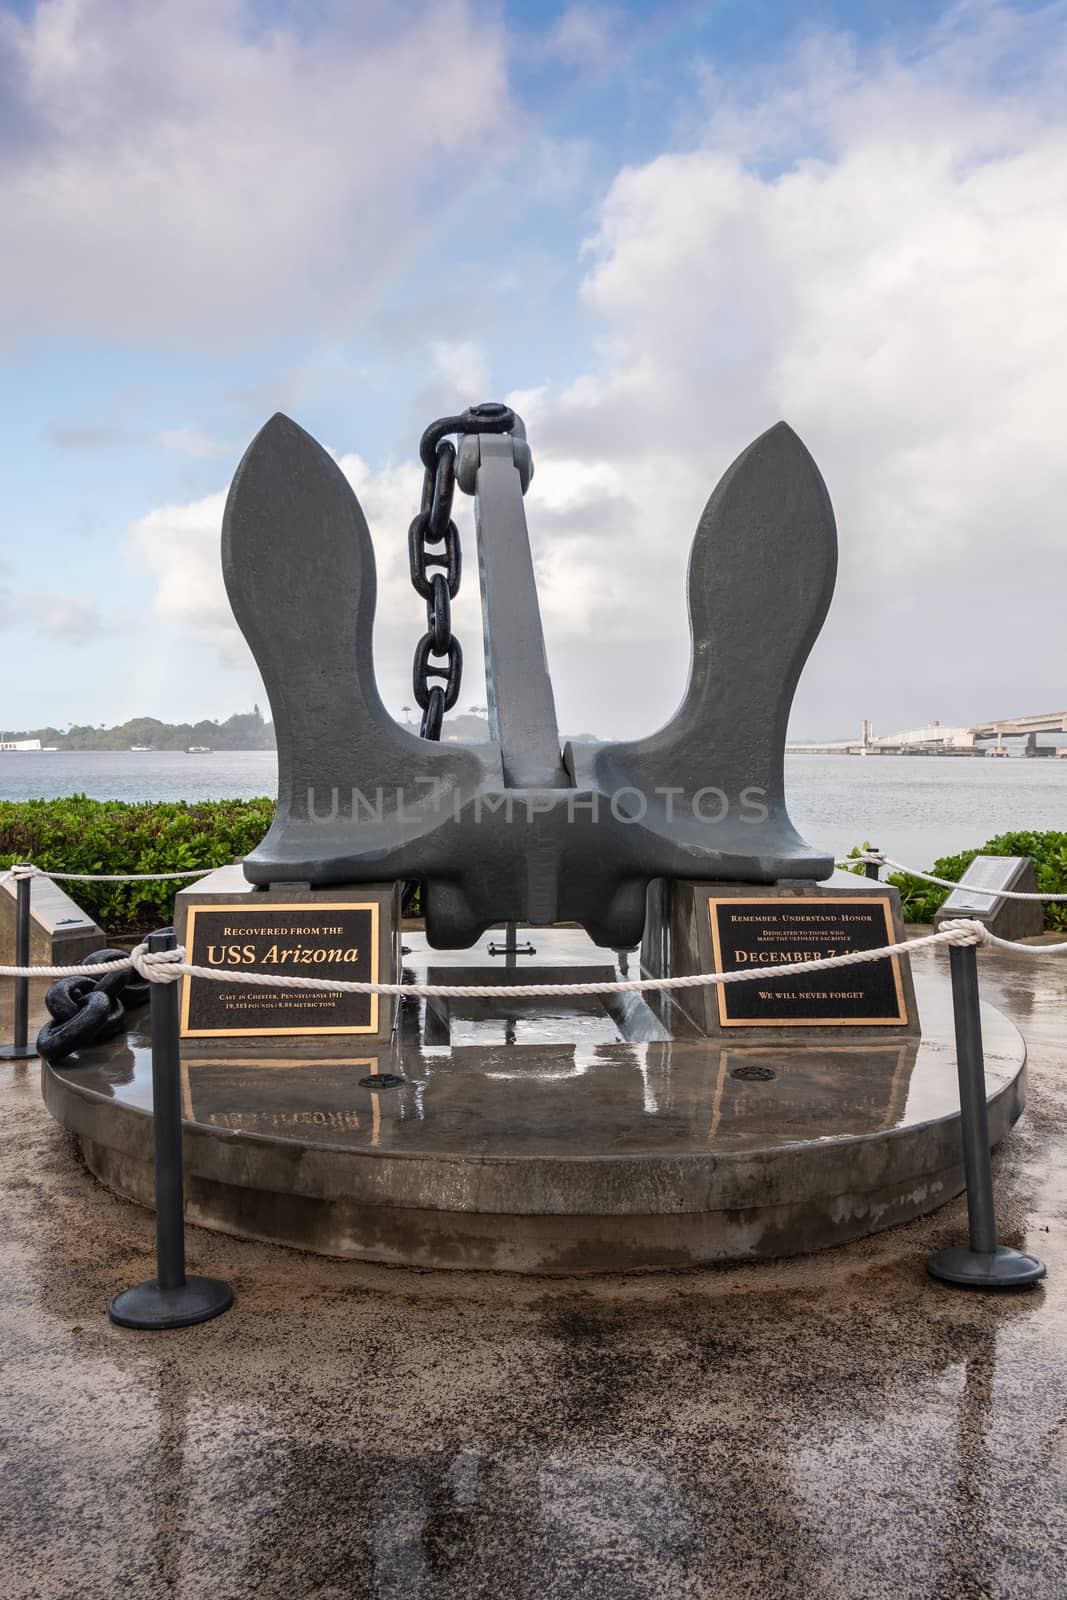 USS Arizona anchor on display as statue Pearl Harbor, Oahu, Hawa by Claudine